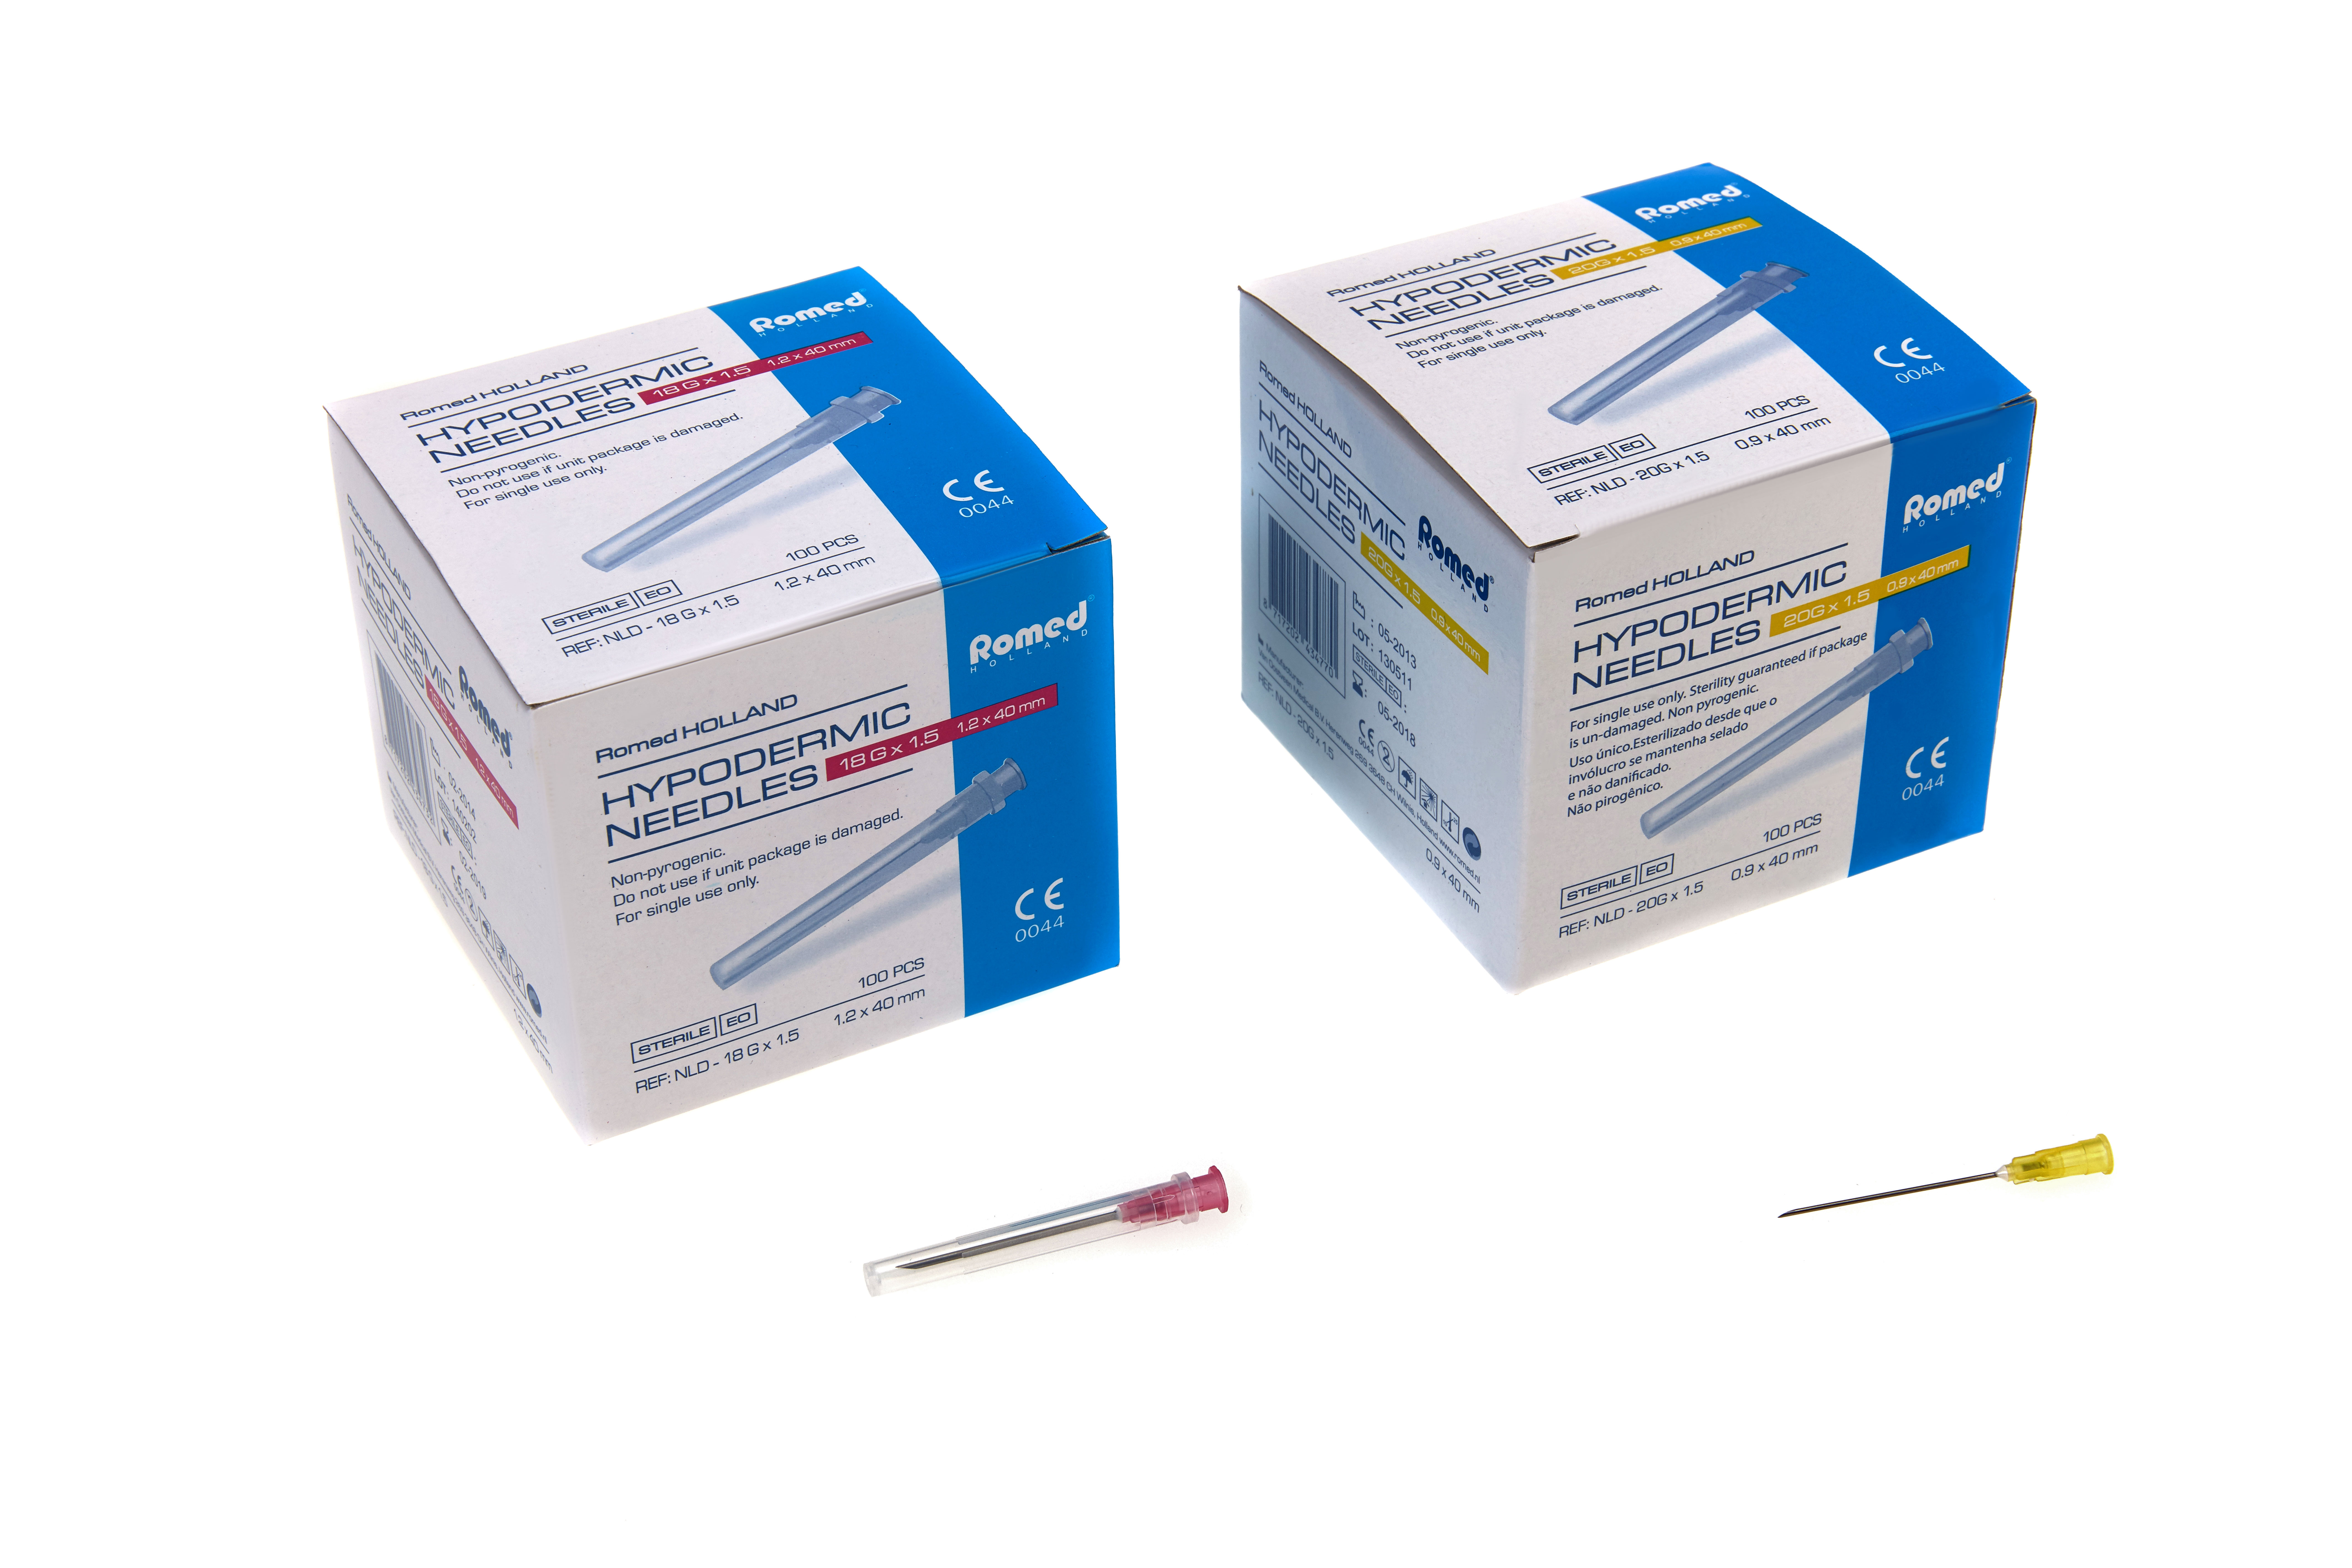 NLD-23GX1.25 Romed hypodermic needles, 23gx1.25", sterile per piece, per 100 pcs in an inner box, 50 x 100 pcs = 5.000 pcs in a carton.